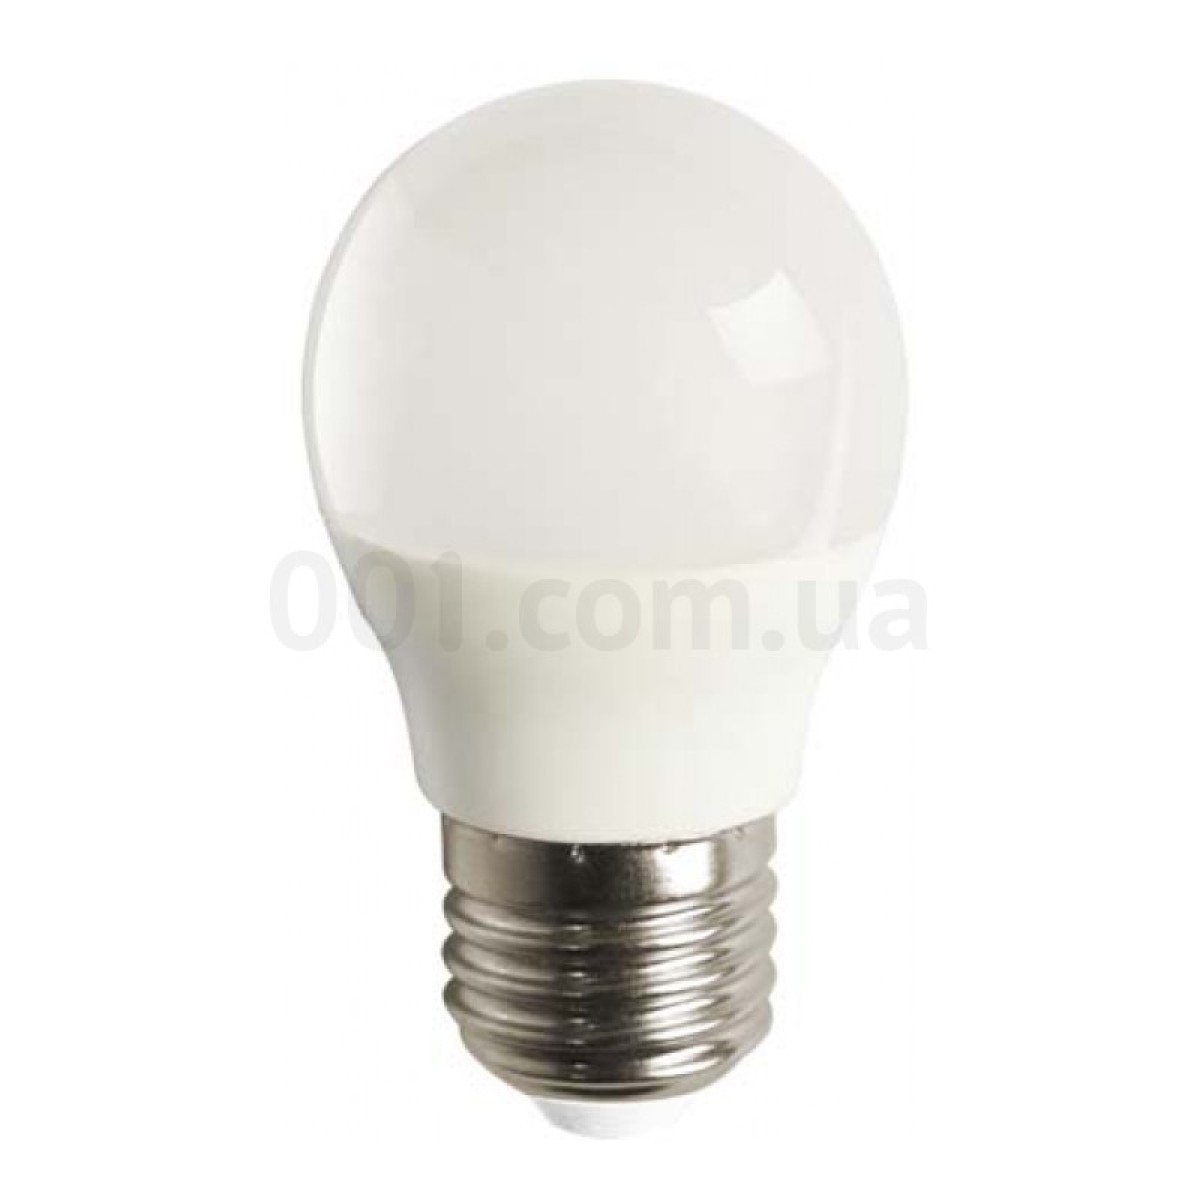 Светодиодная лампа LB-380 G45 (шар) 4Вт 2700K E27, Feron 256_256.jpg